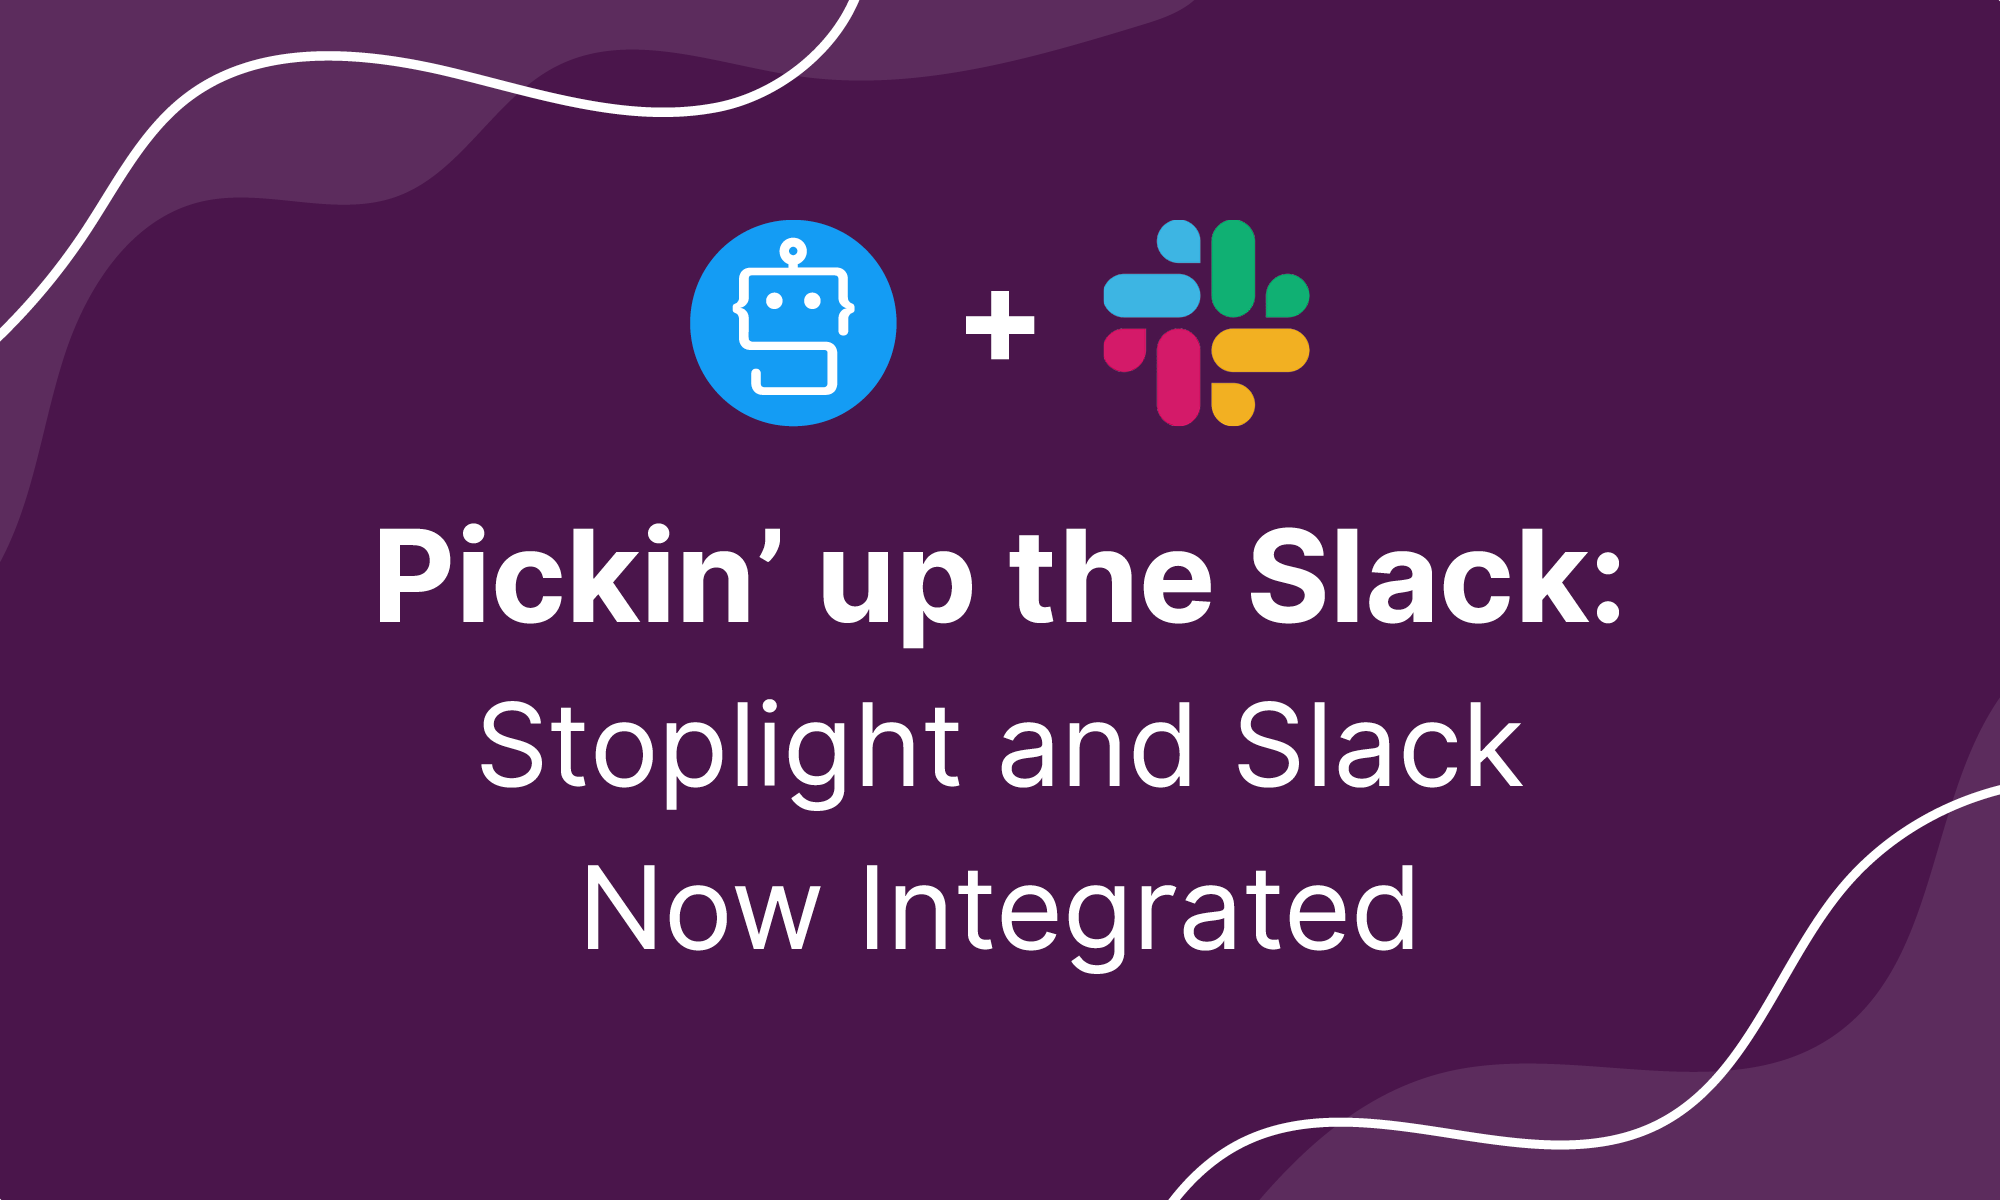 Pickin’ up the Slack: Stoplight and Slack Now Integrated